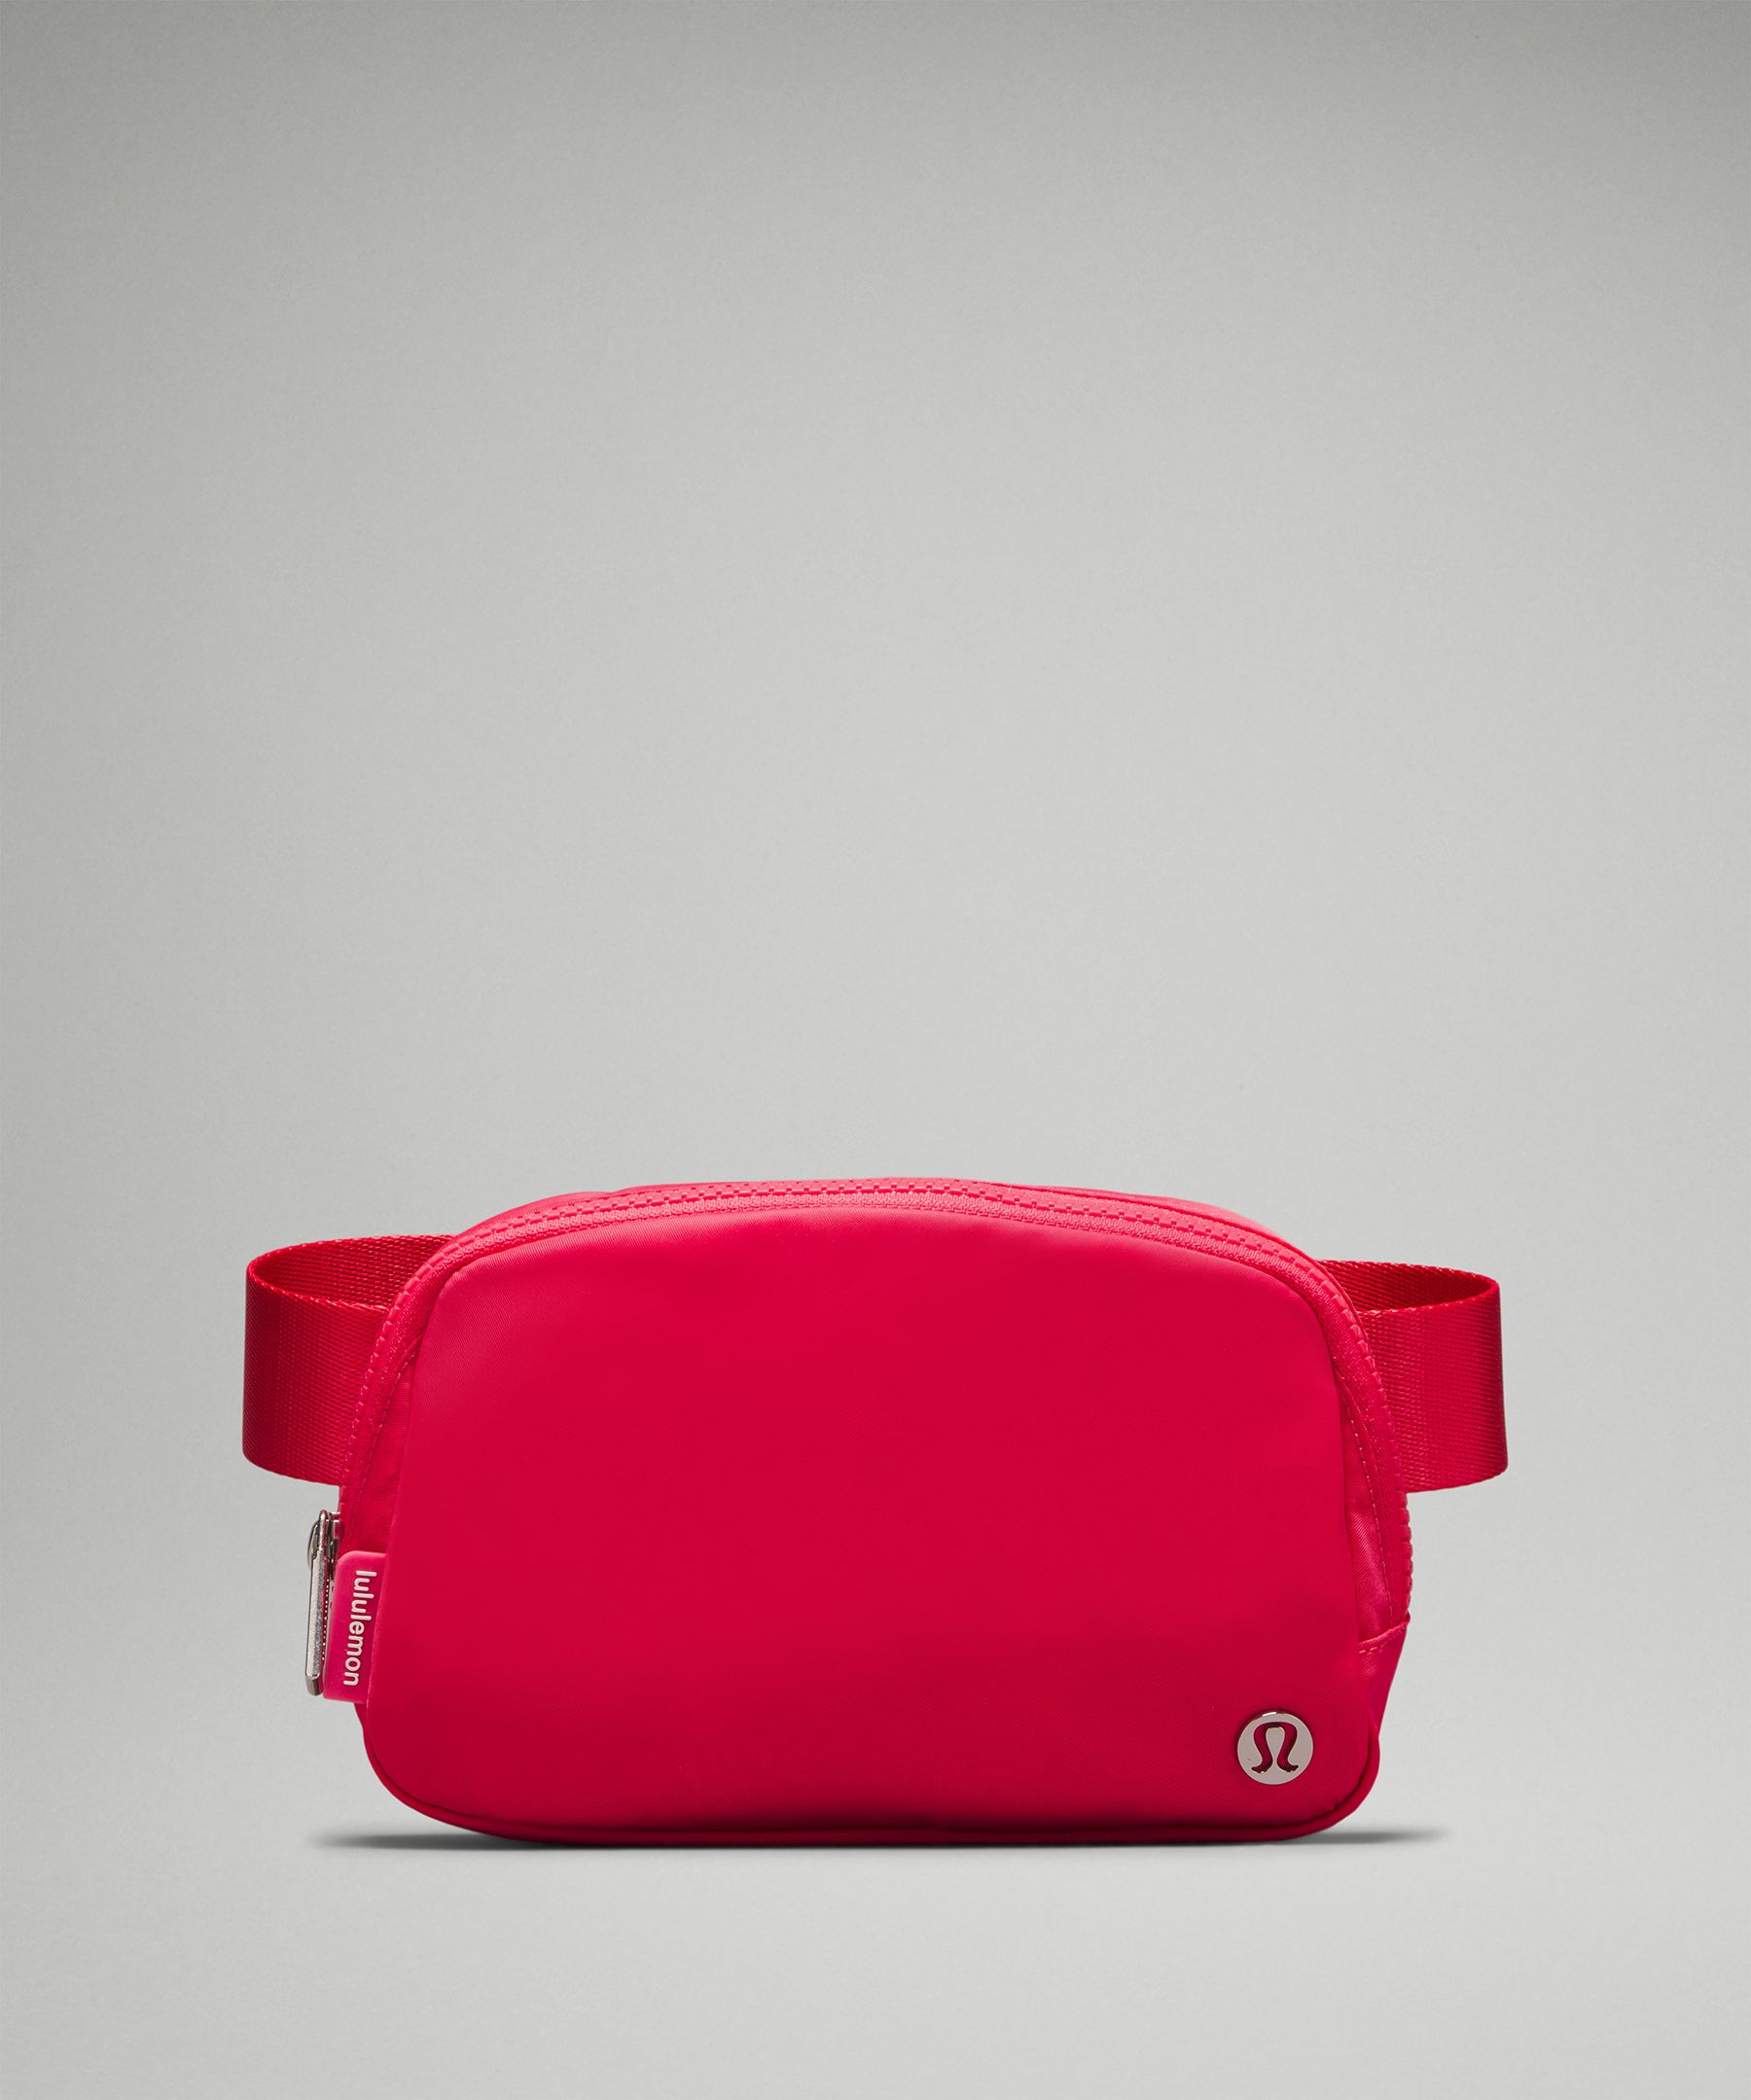 Lululemon Everywhere Belt Bag Red Merlot, Red Merlot, Everywhere Belt Bag :  : Clothing, Shoes & Accessories